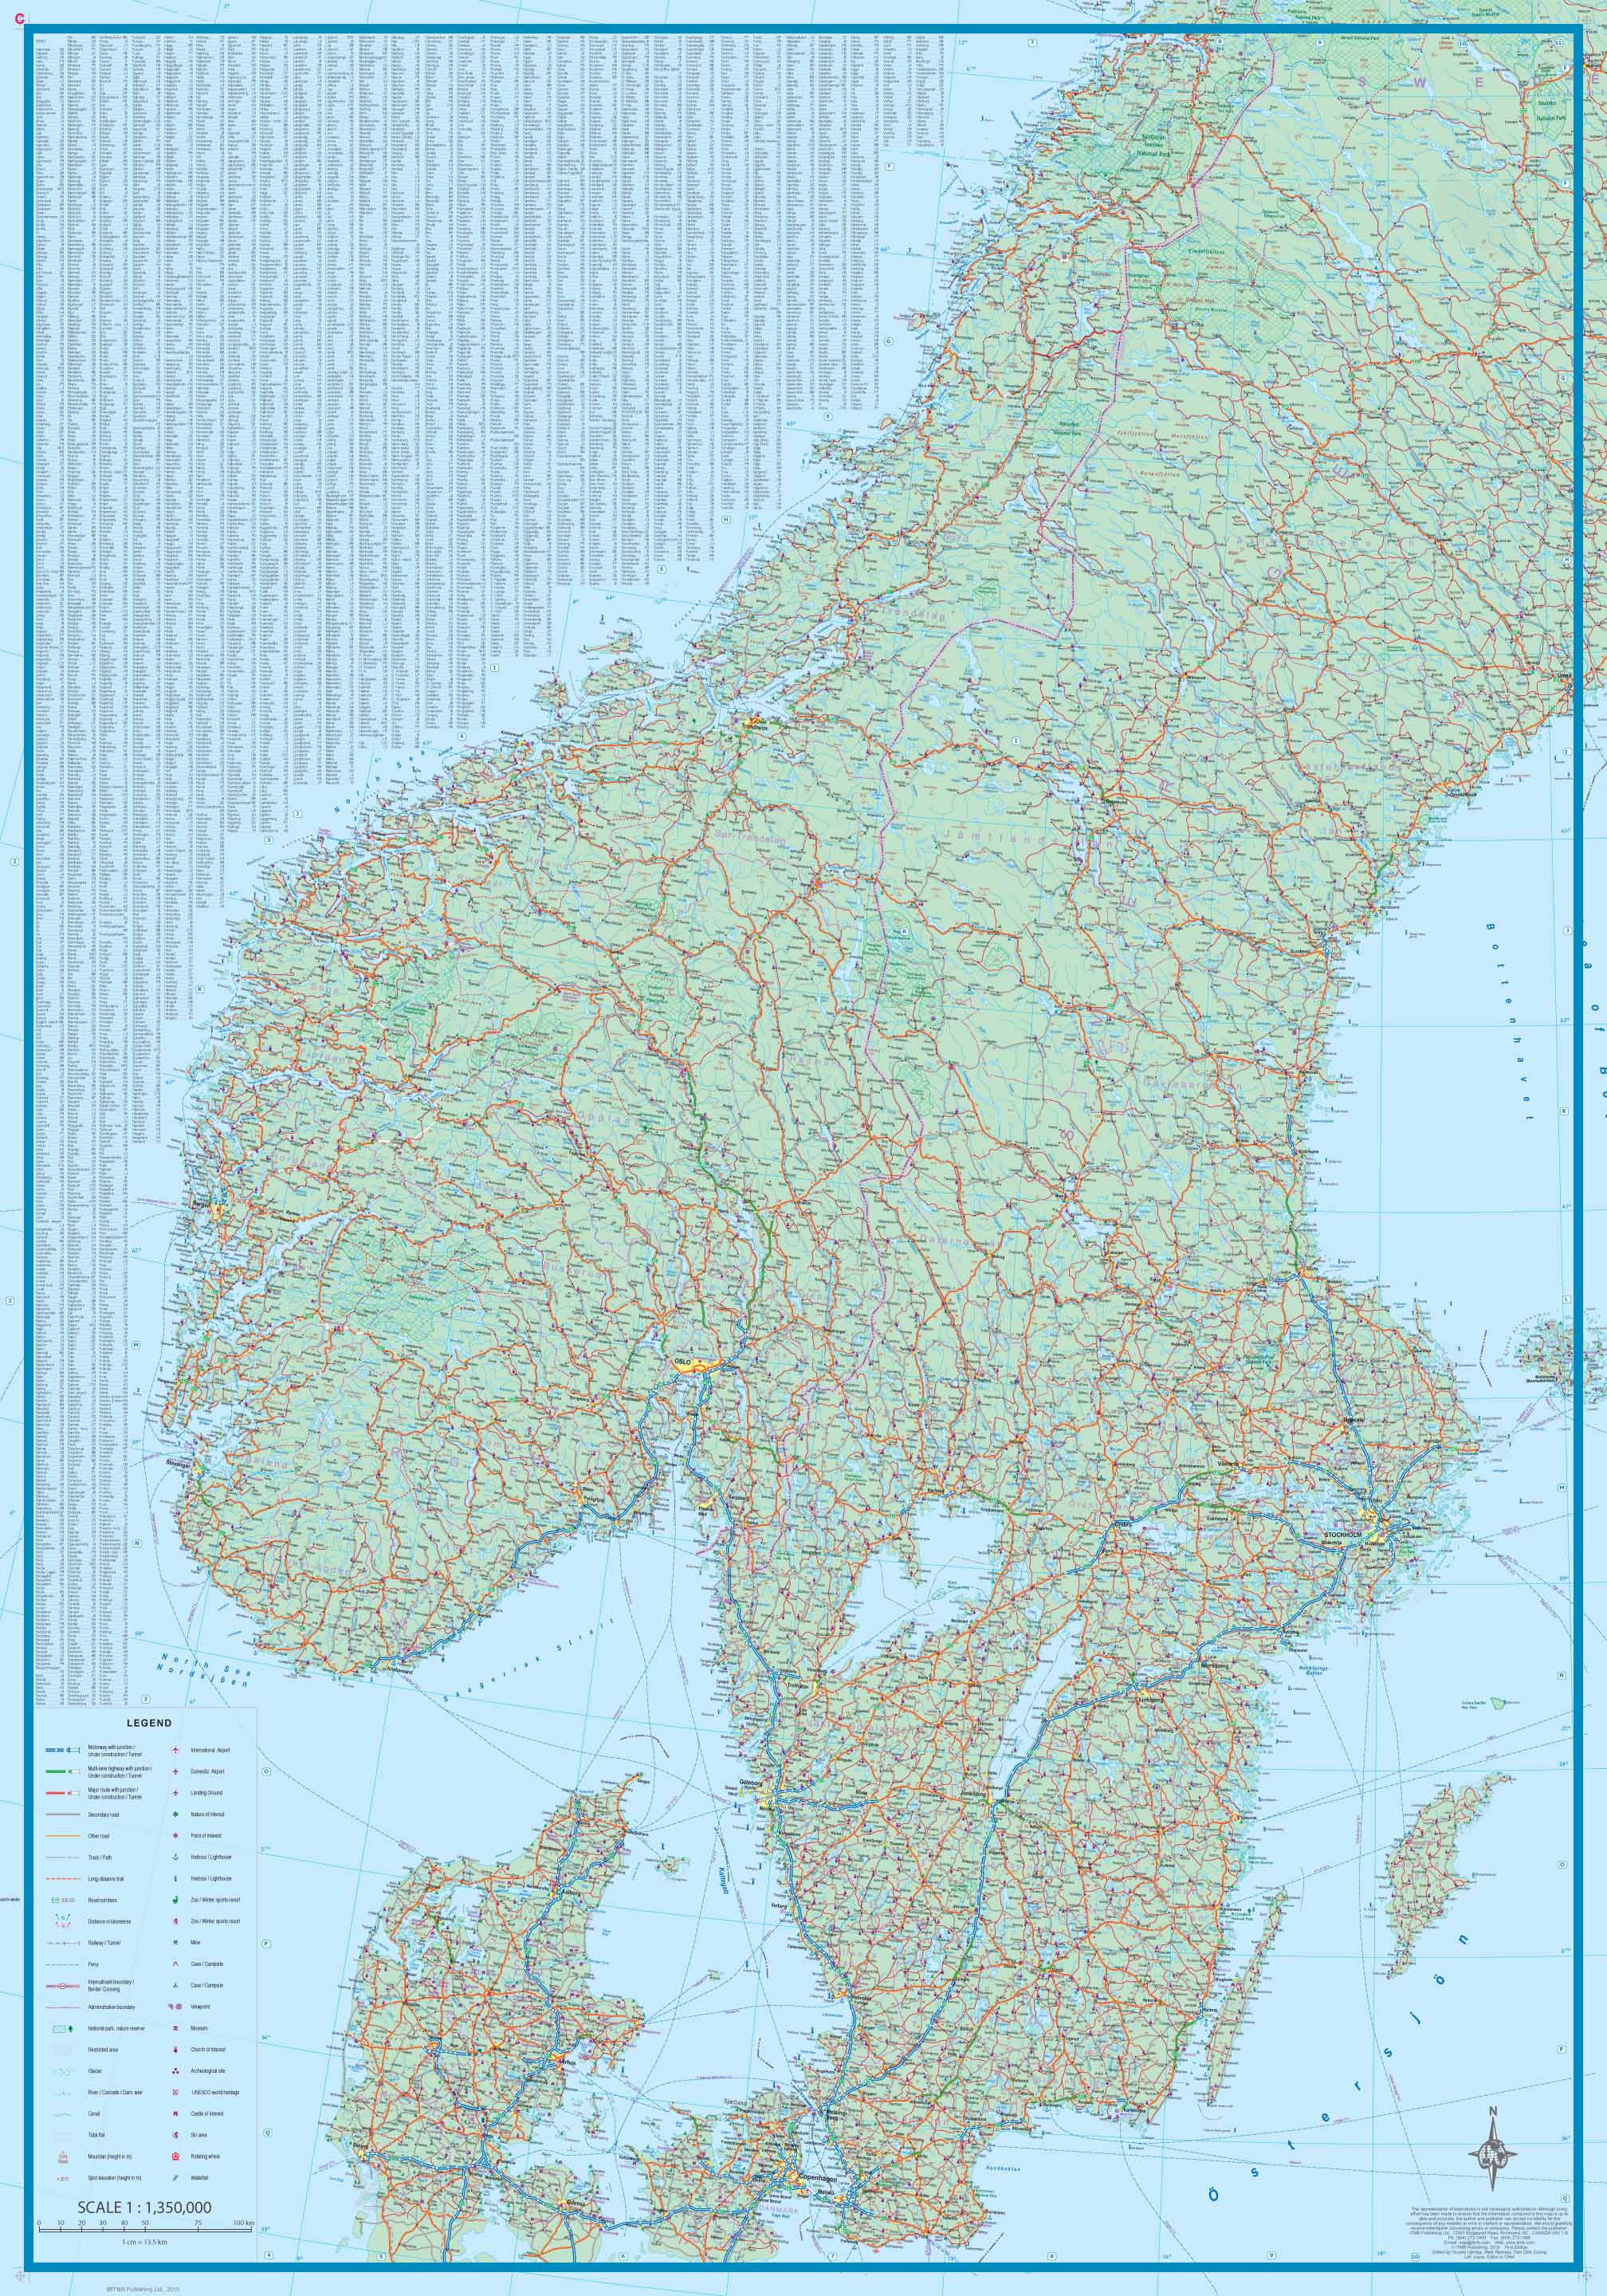 Scandinavia ITM - 1:35.000.000